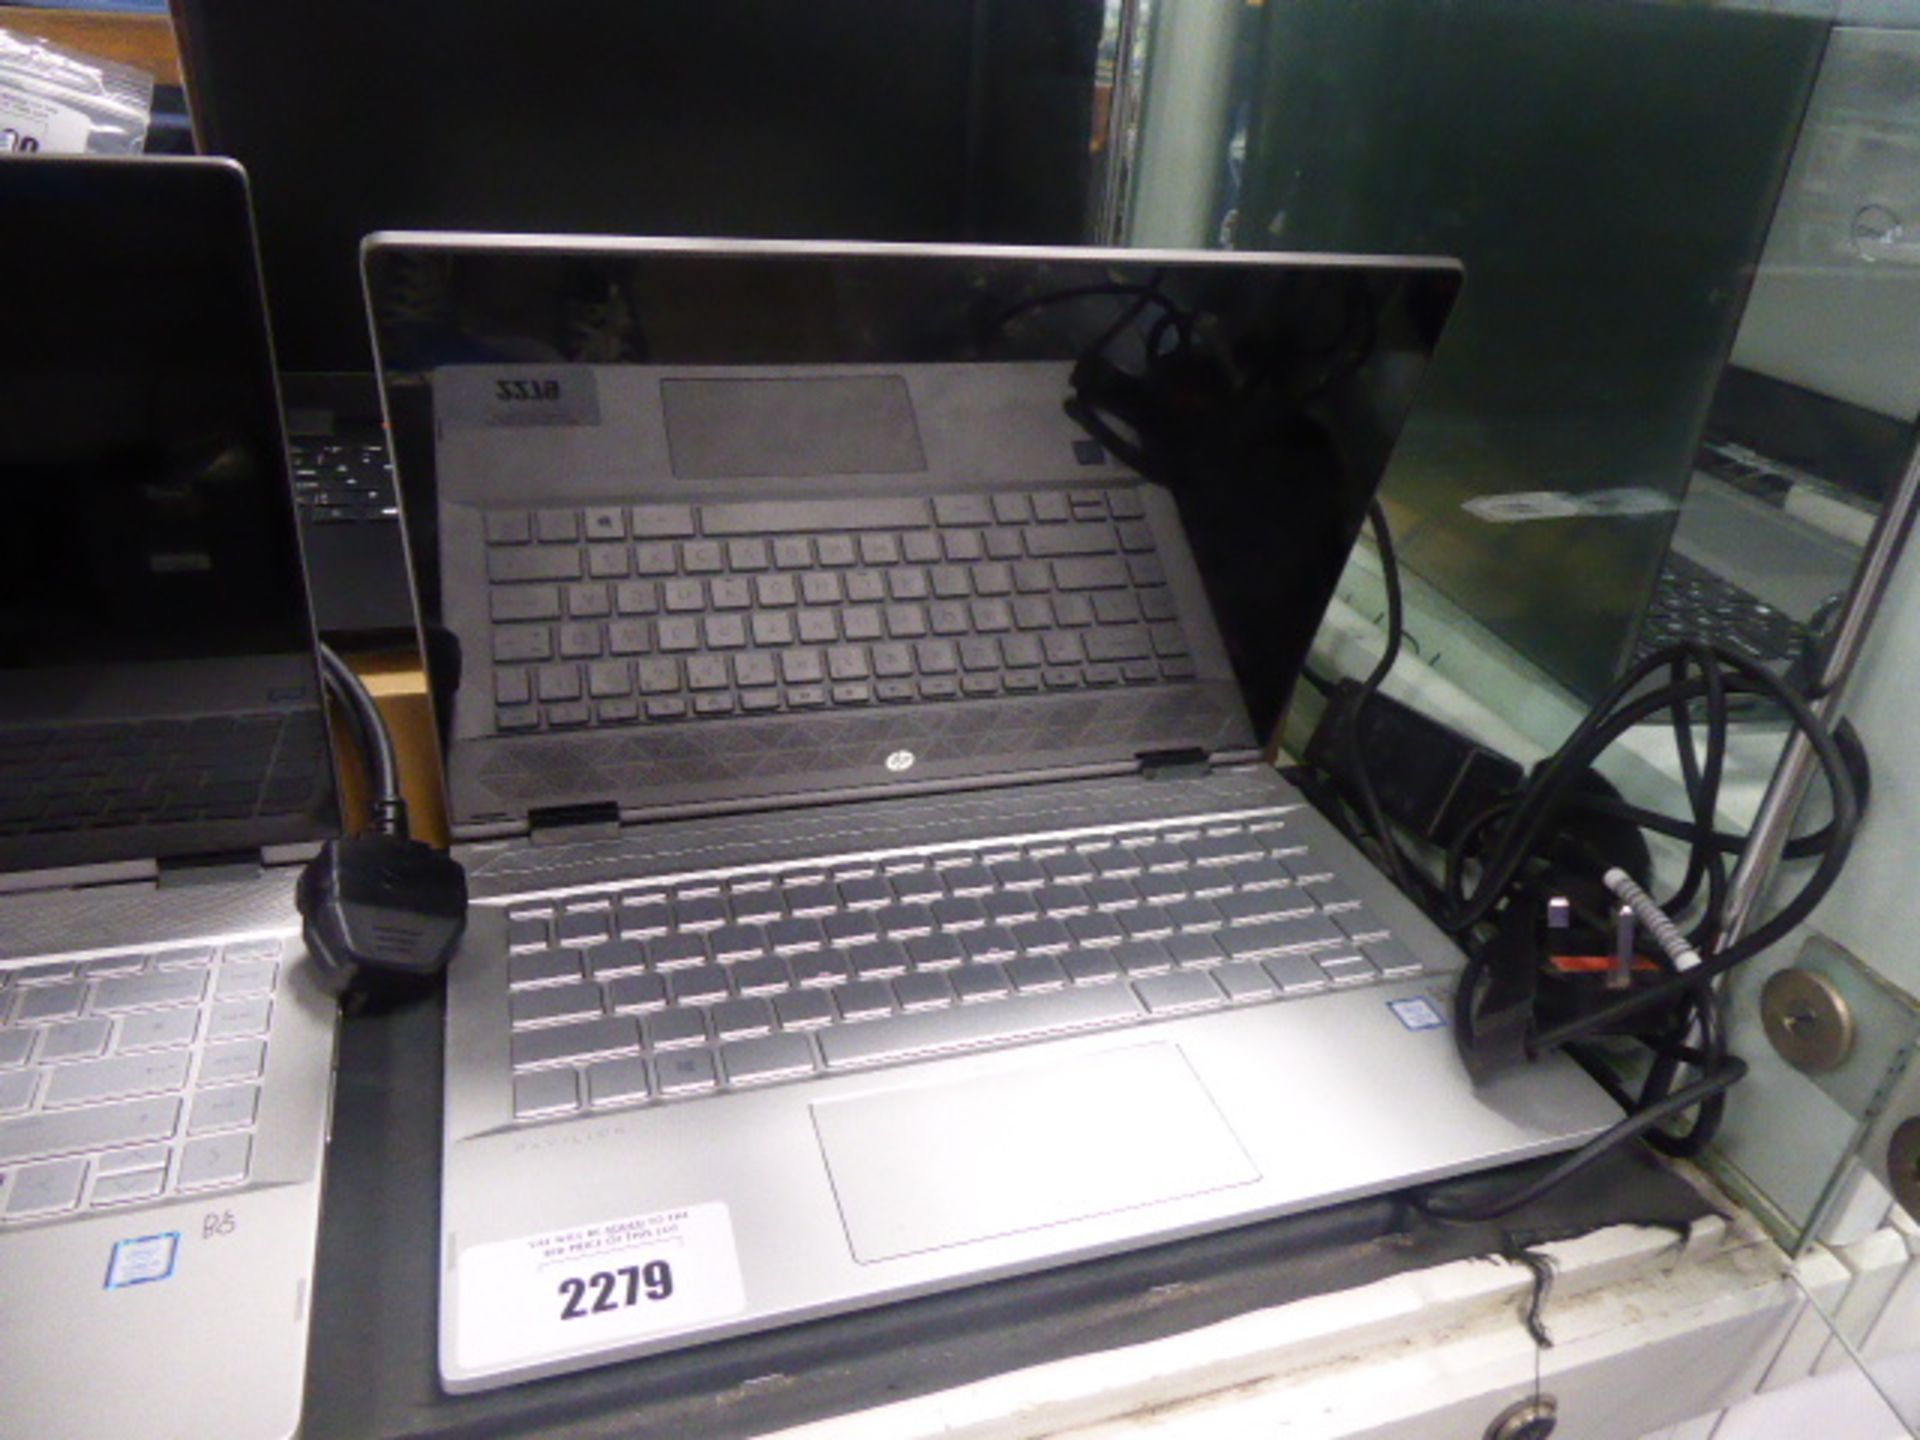 HP Pavilion X360 touch screen win 10 laptop intel core i5 8th gen processor 8gb ram 256gb ssd with